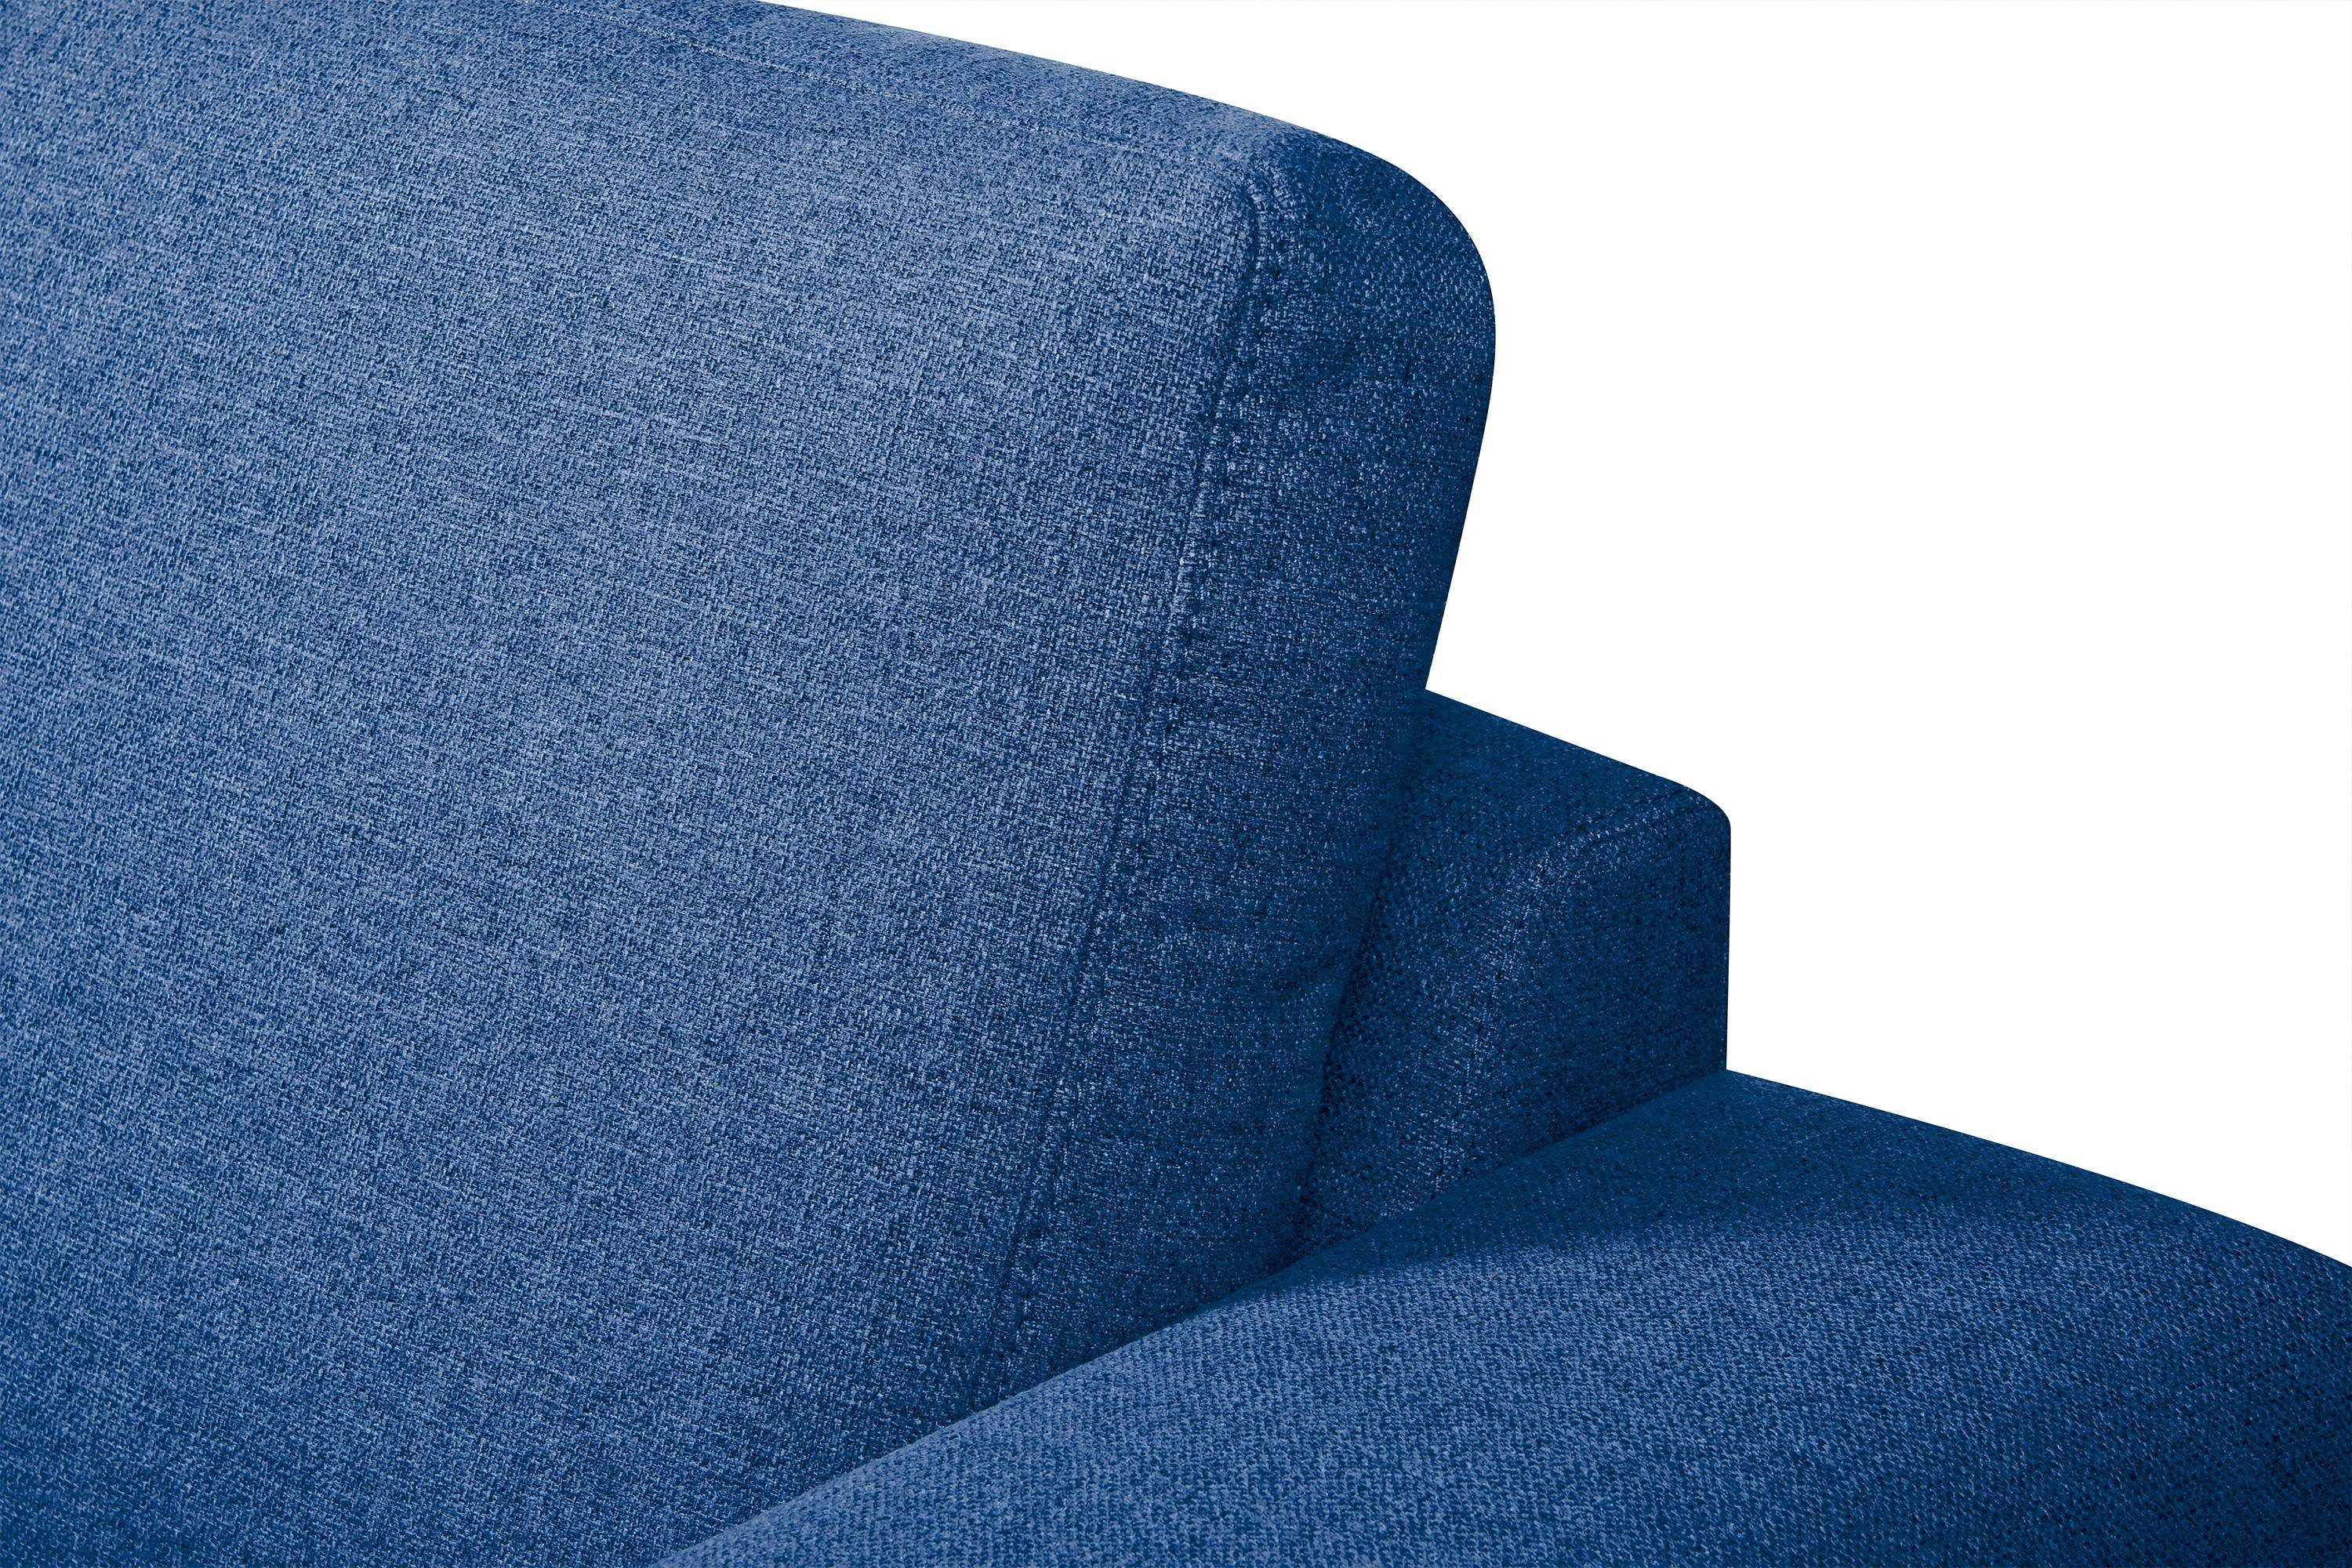 Massivholzbeine, Design blau blau zeitloses 3-Sitzer Konsimo blau | Personen, Sofa ALIO 3 |